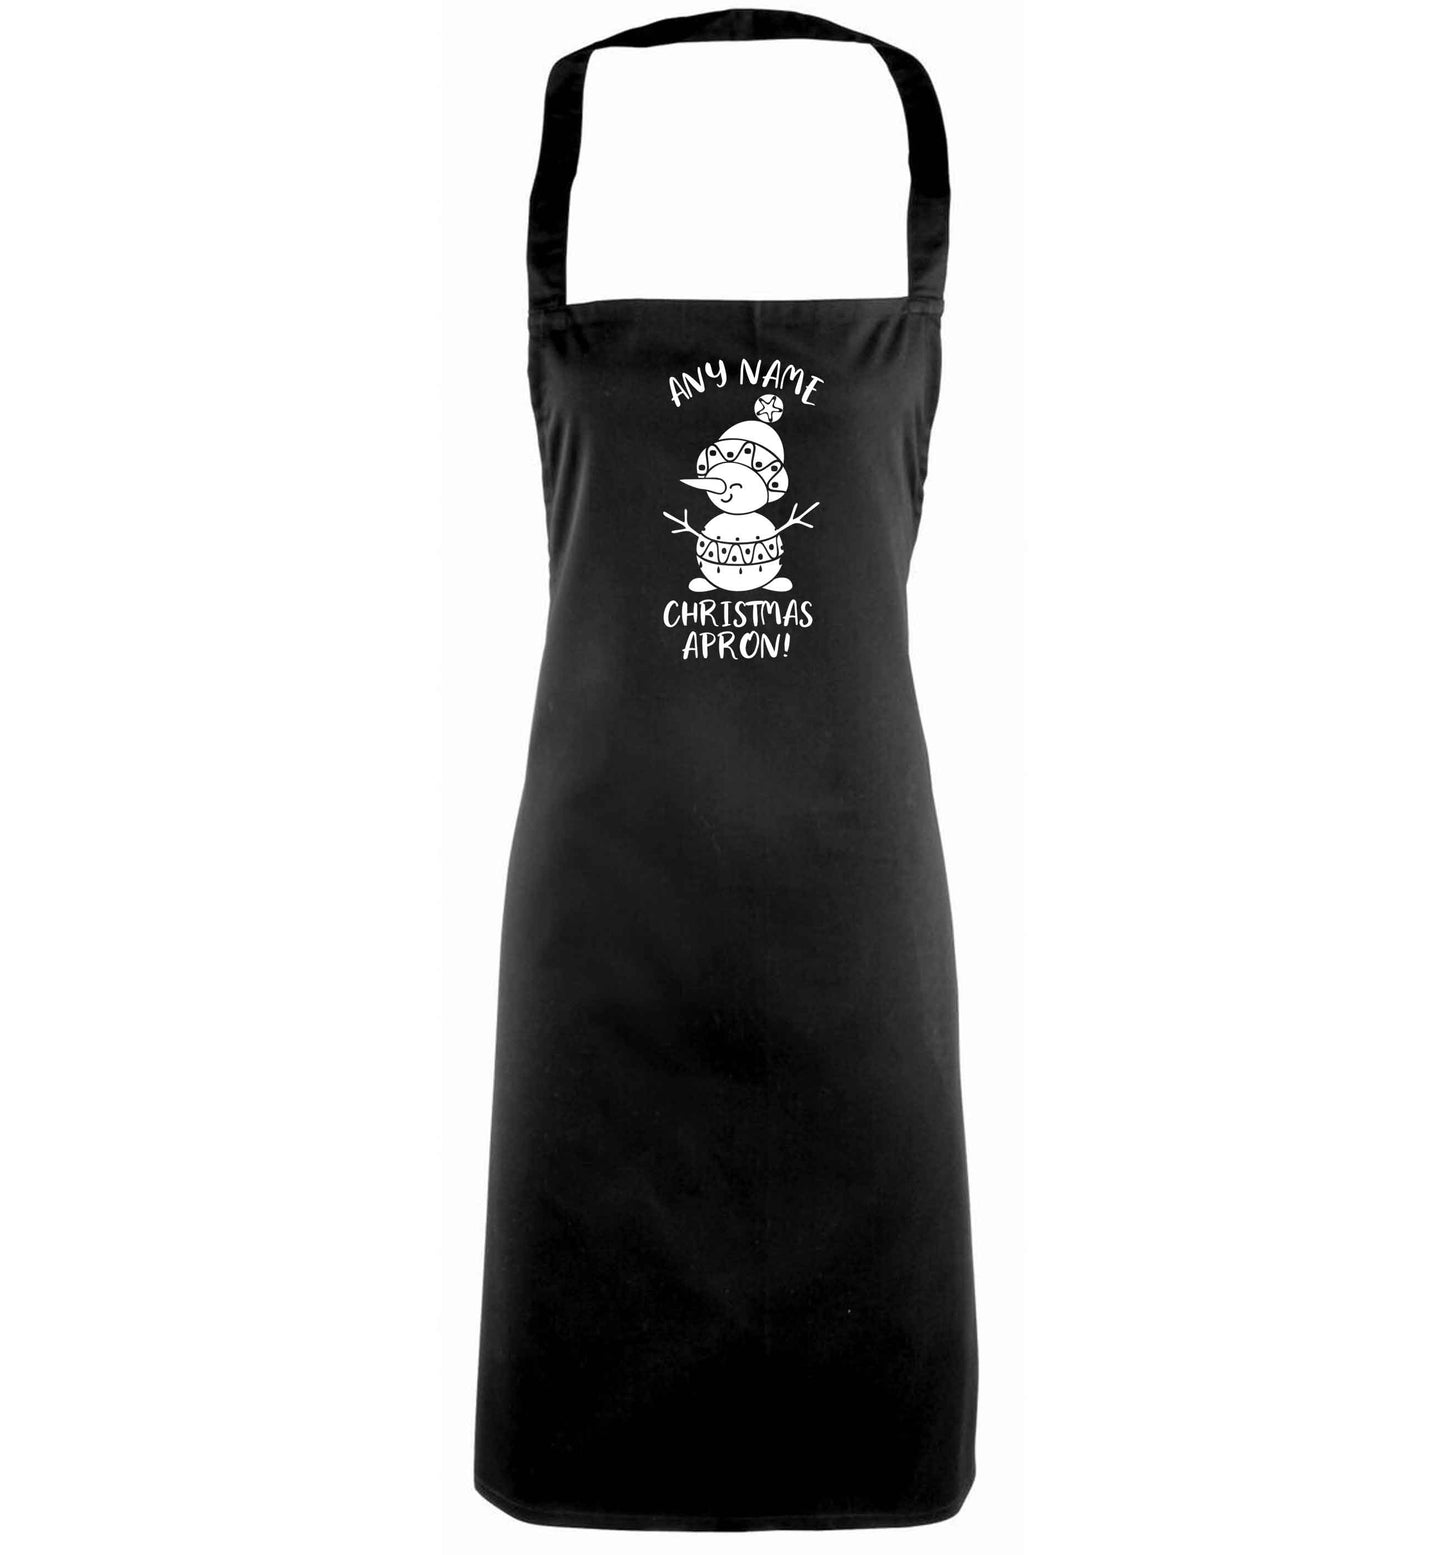 Personalised Christmas apron any name black apron